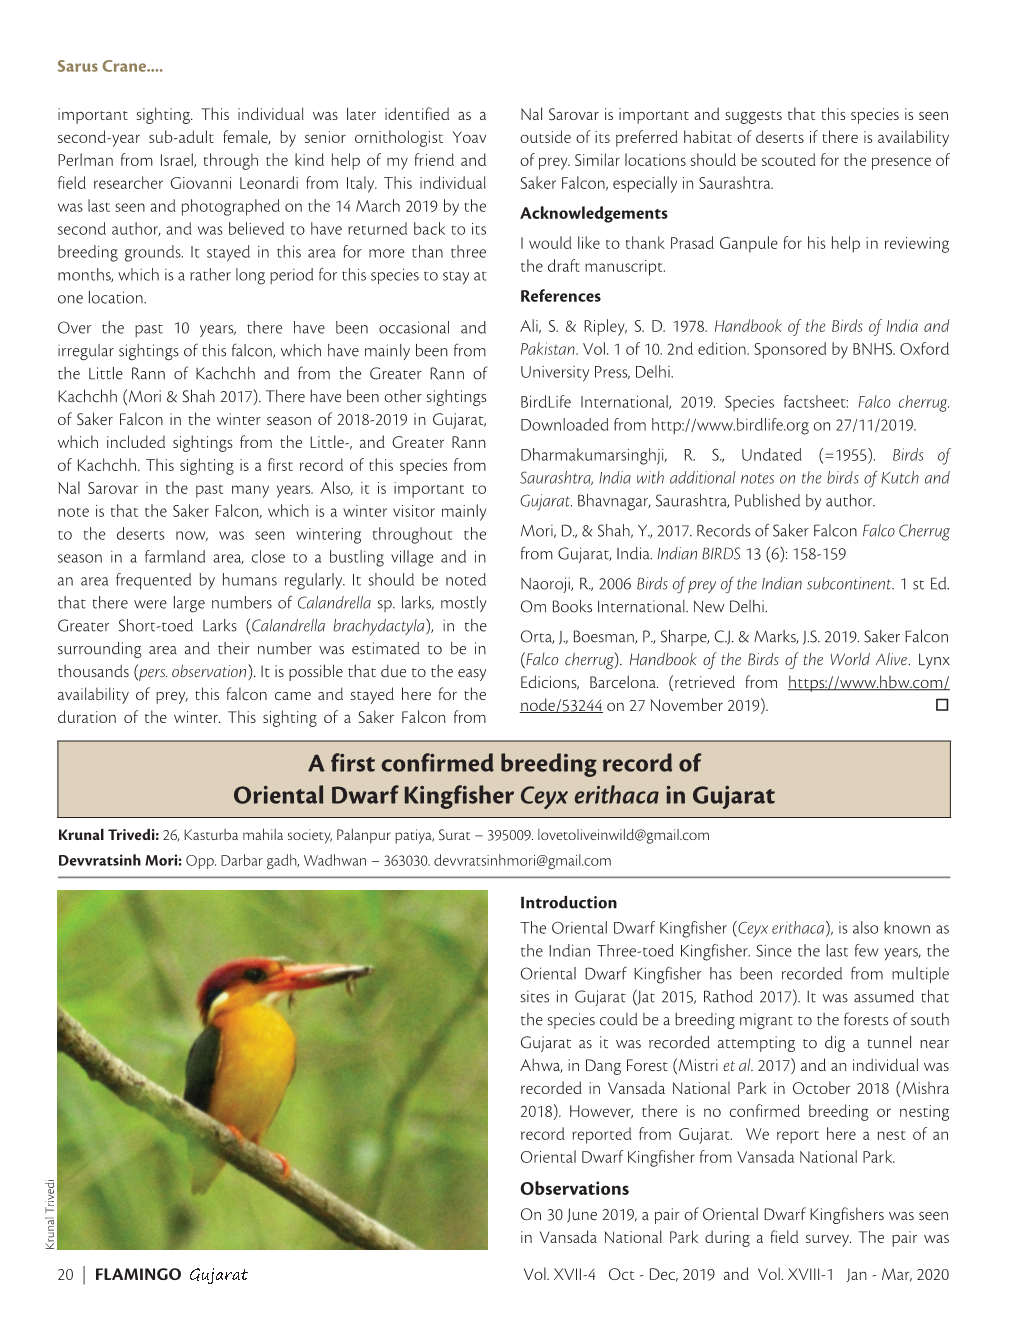 A First Confirmed Breeding Record of Oriental Dwarf Kingfisher Ceyx Erithaca in Gujarat